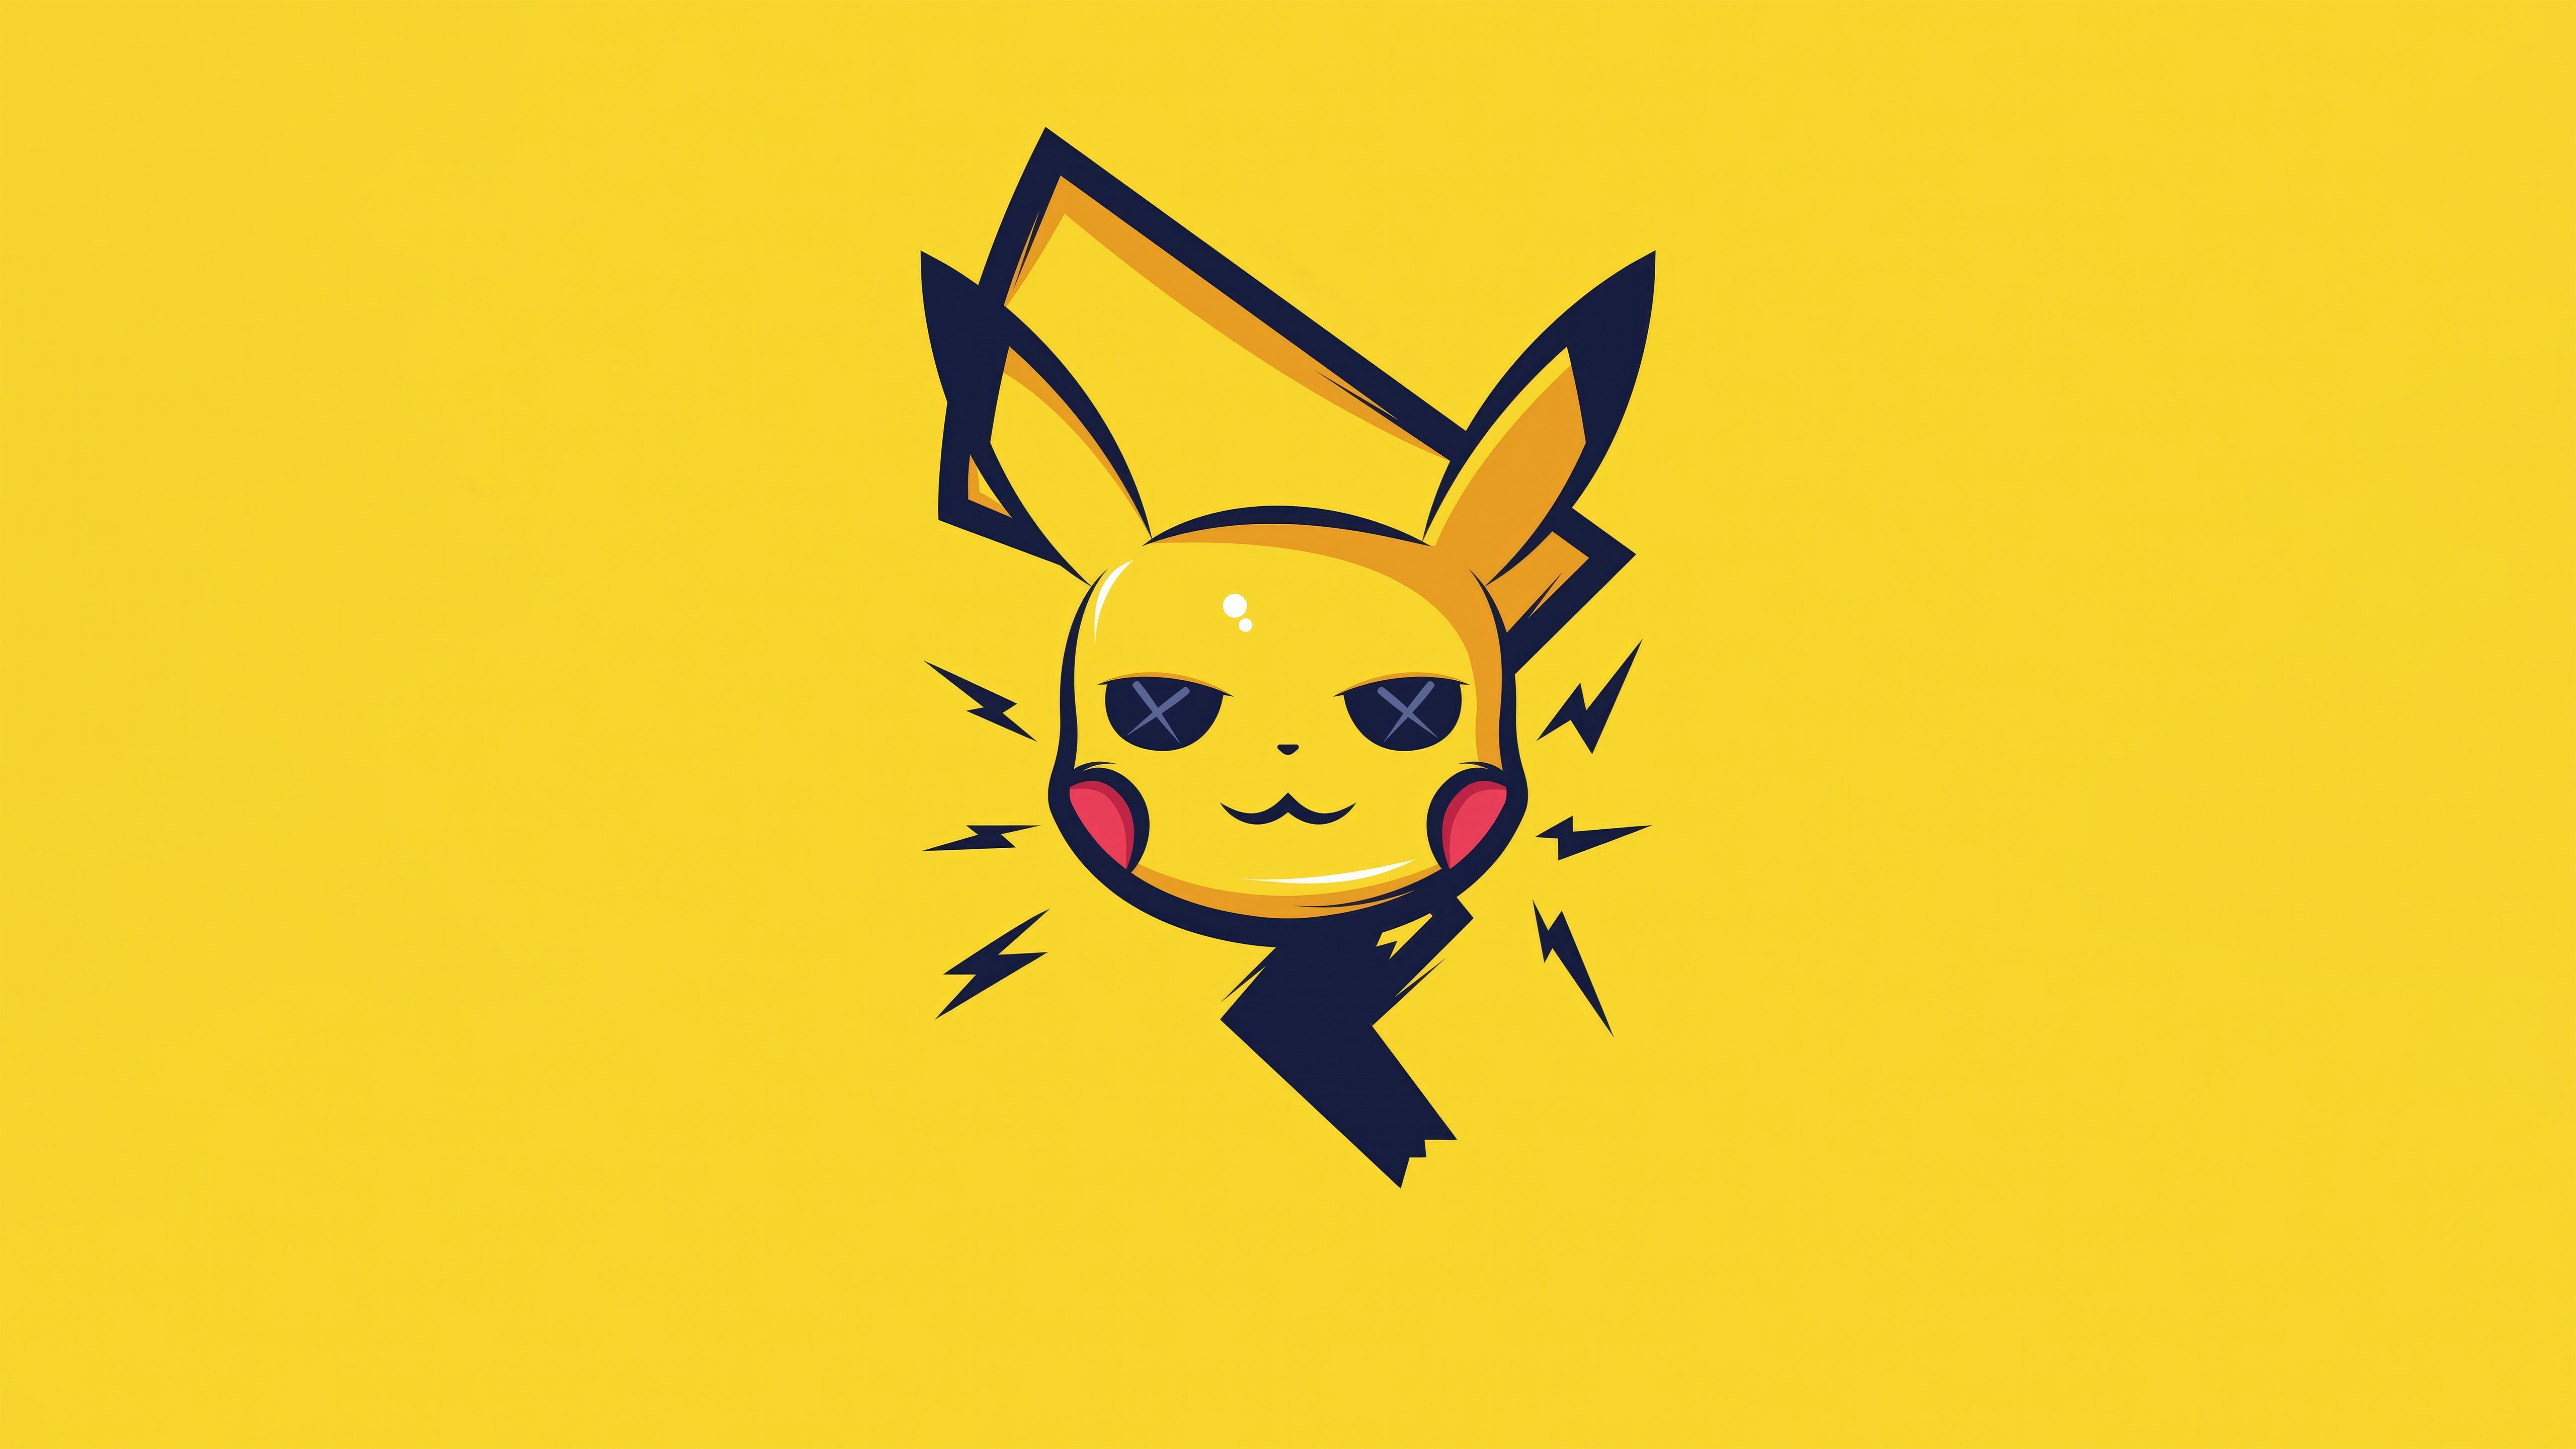 Fondos de pantalla Pikachu abstract minimalist